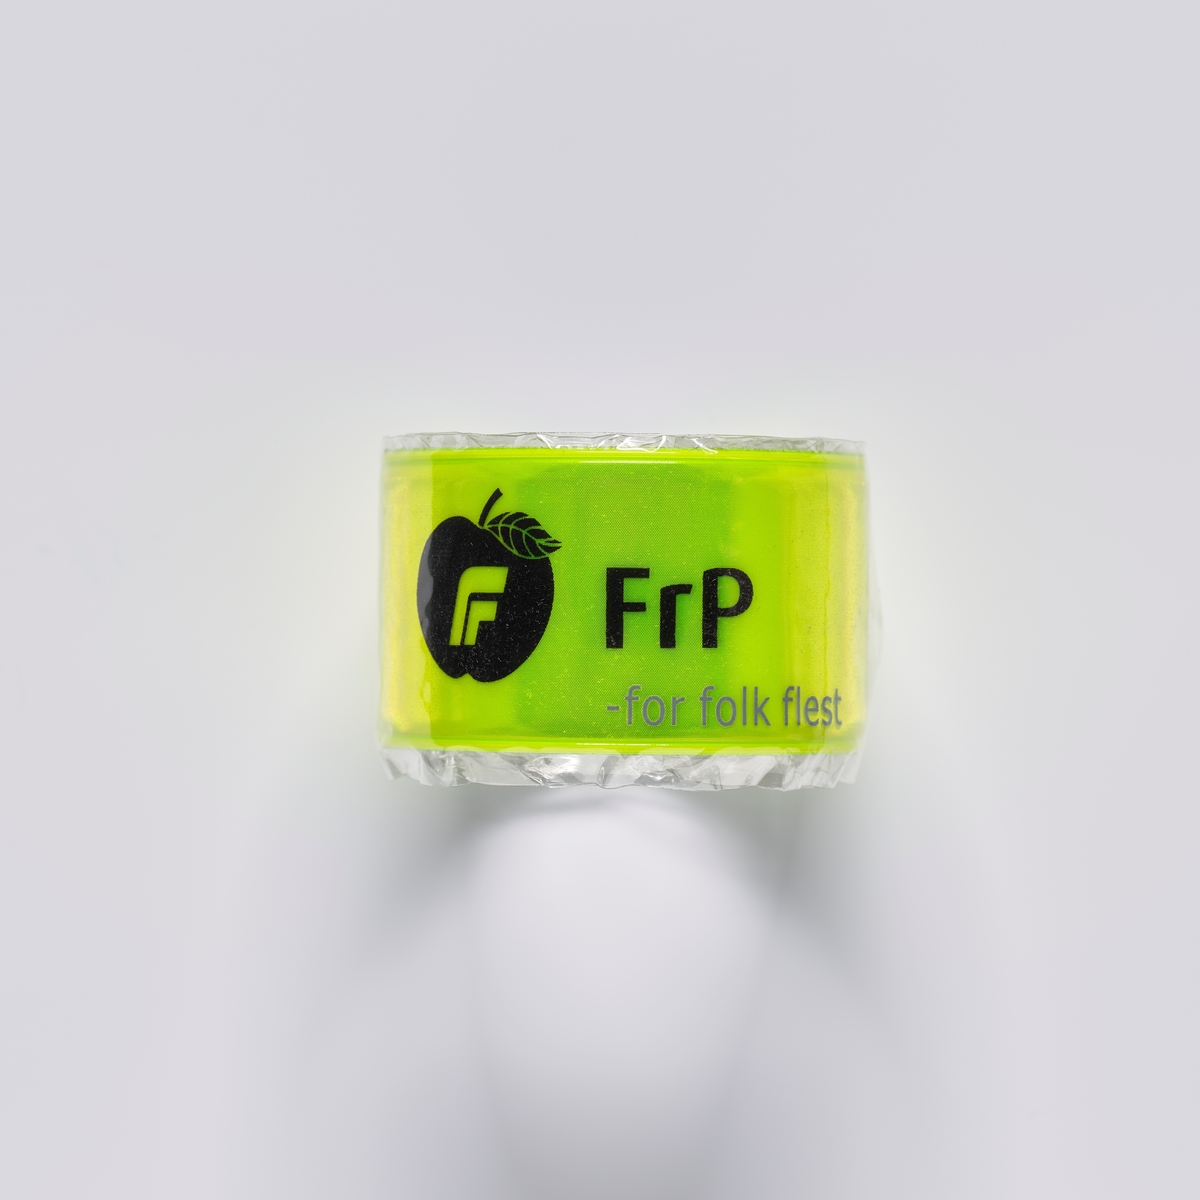 Et eple med Fp som er logoen for Fremskrittspartiet.